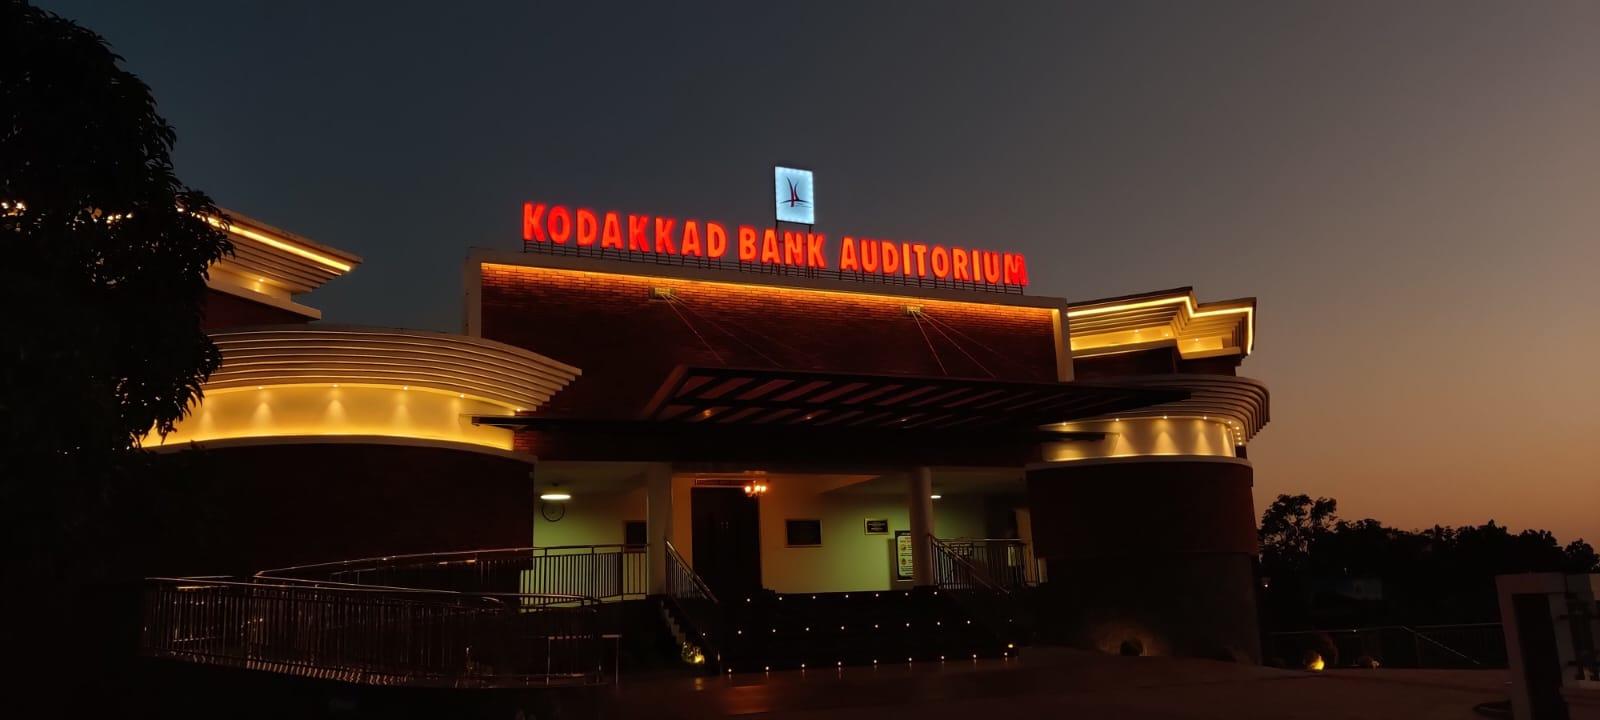 kodakkad auditorium lighting design images gallery